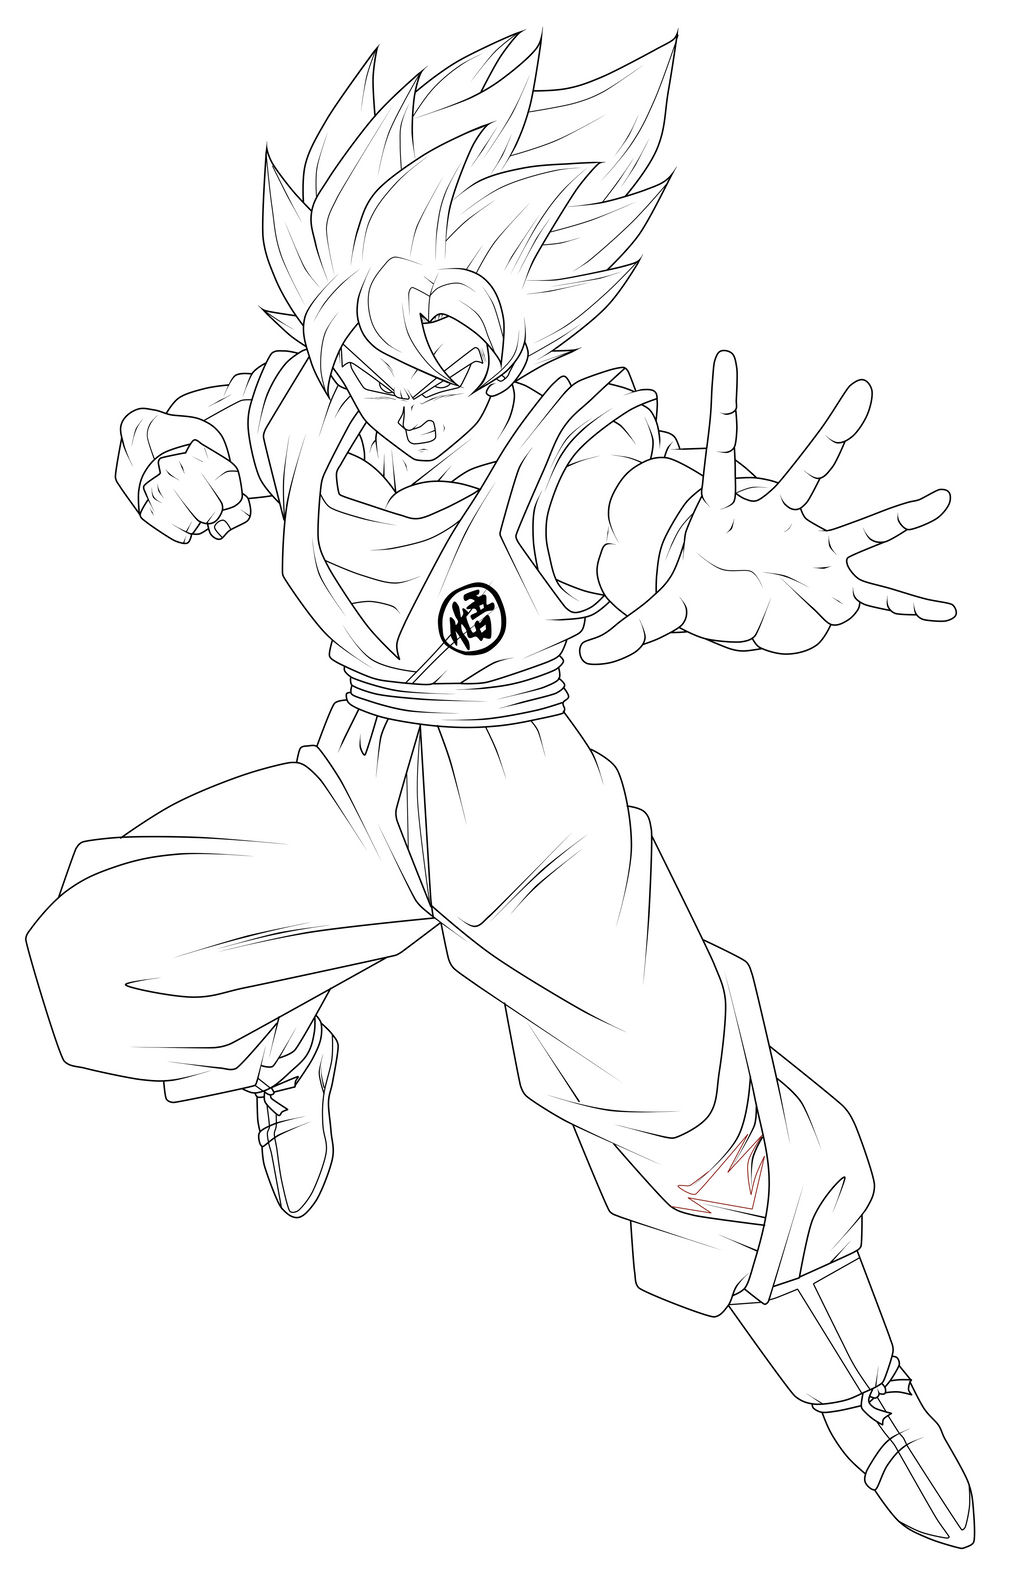 Goku Super Saiyan - Lineart by ChronoFz on DeviantArt